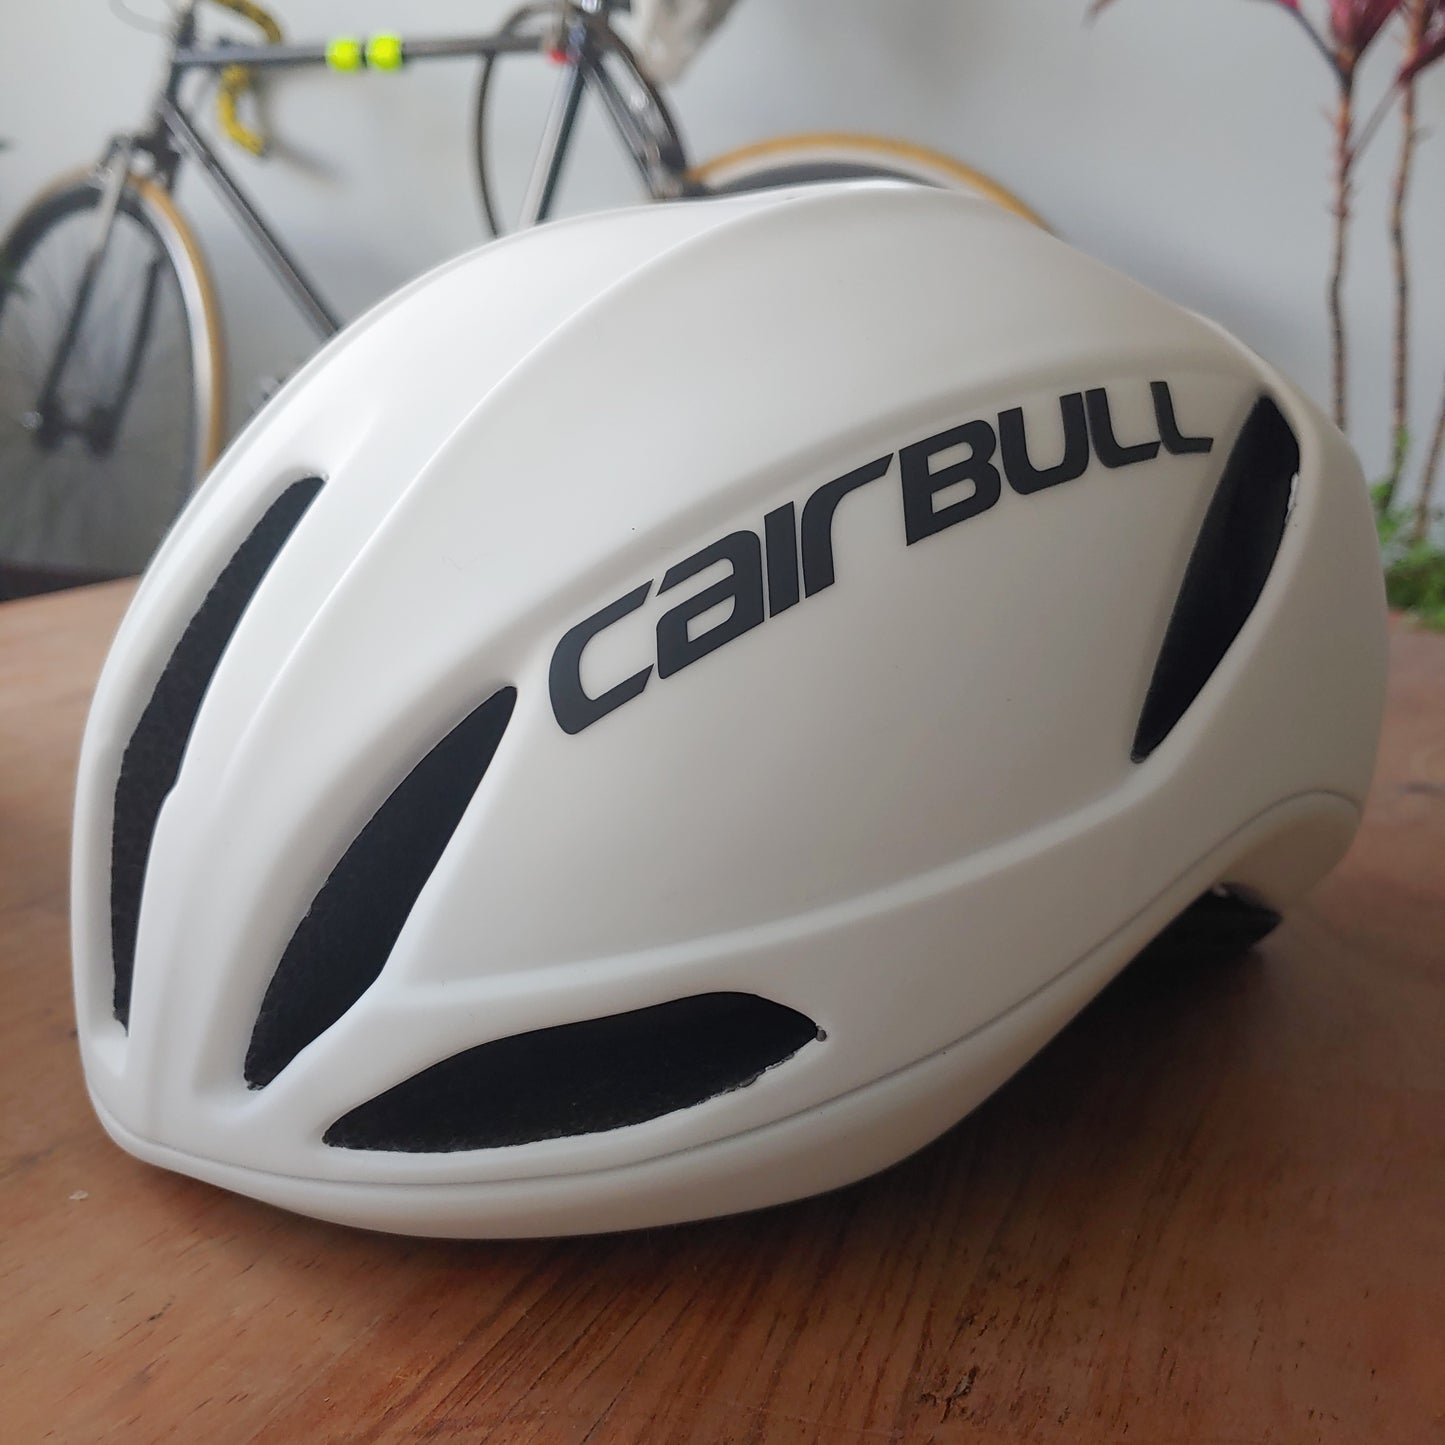 Casco Cairbull de carreras aerodinámico blanco con gafas para ciclismo